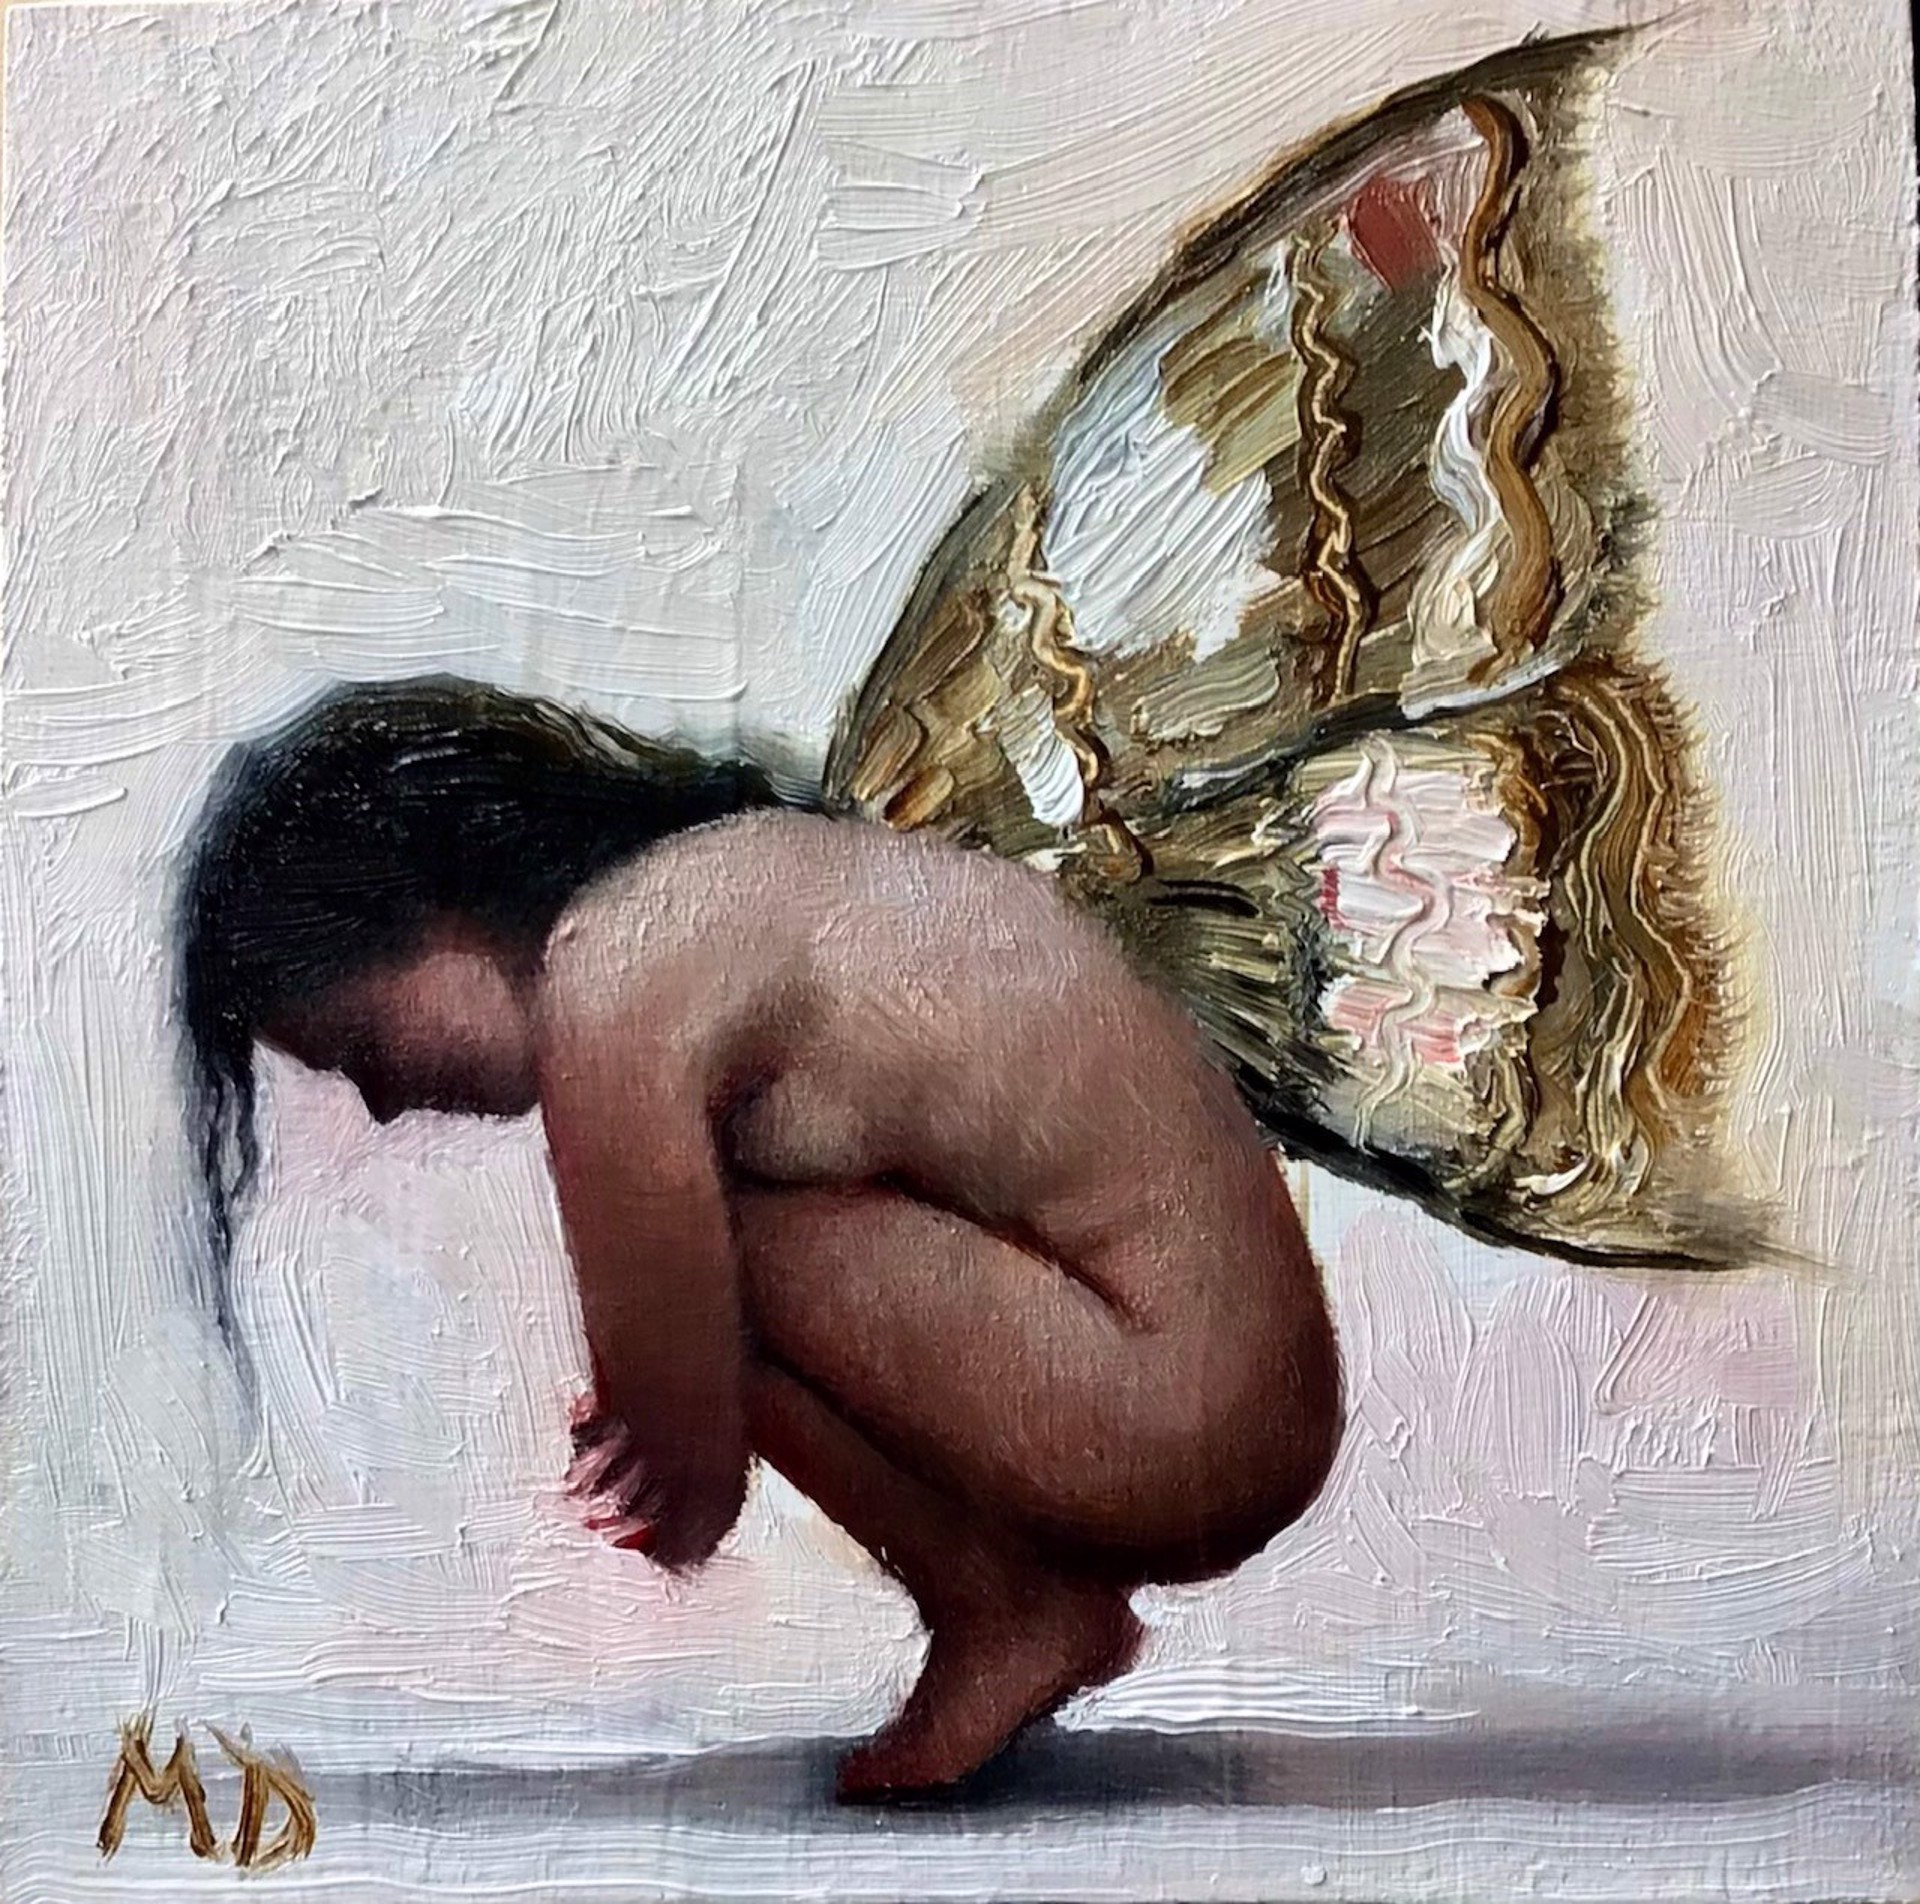 Curled Fairy by Matteo Di Ventra